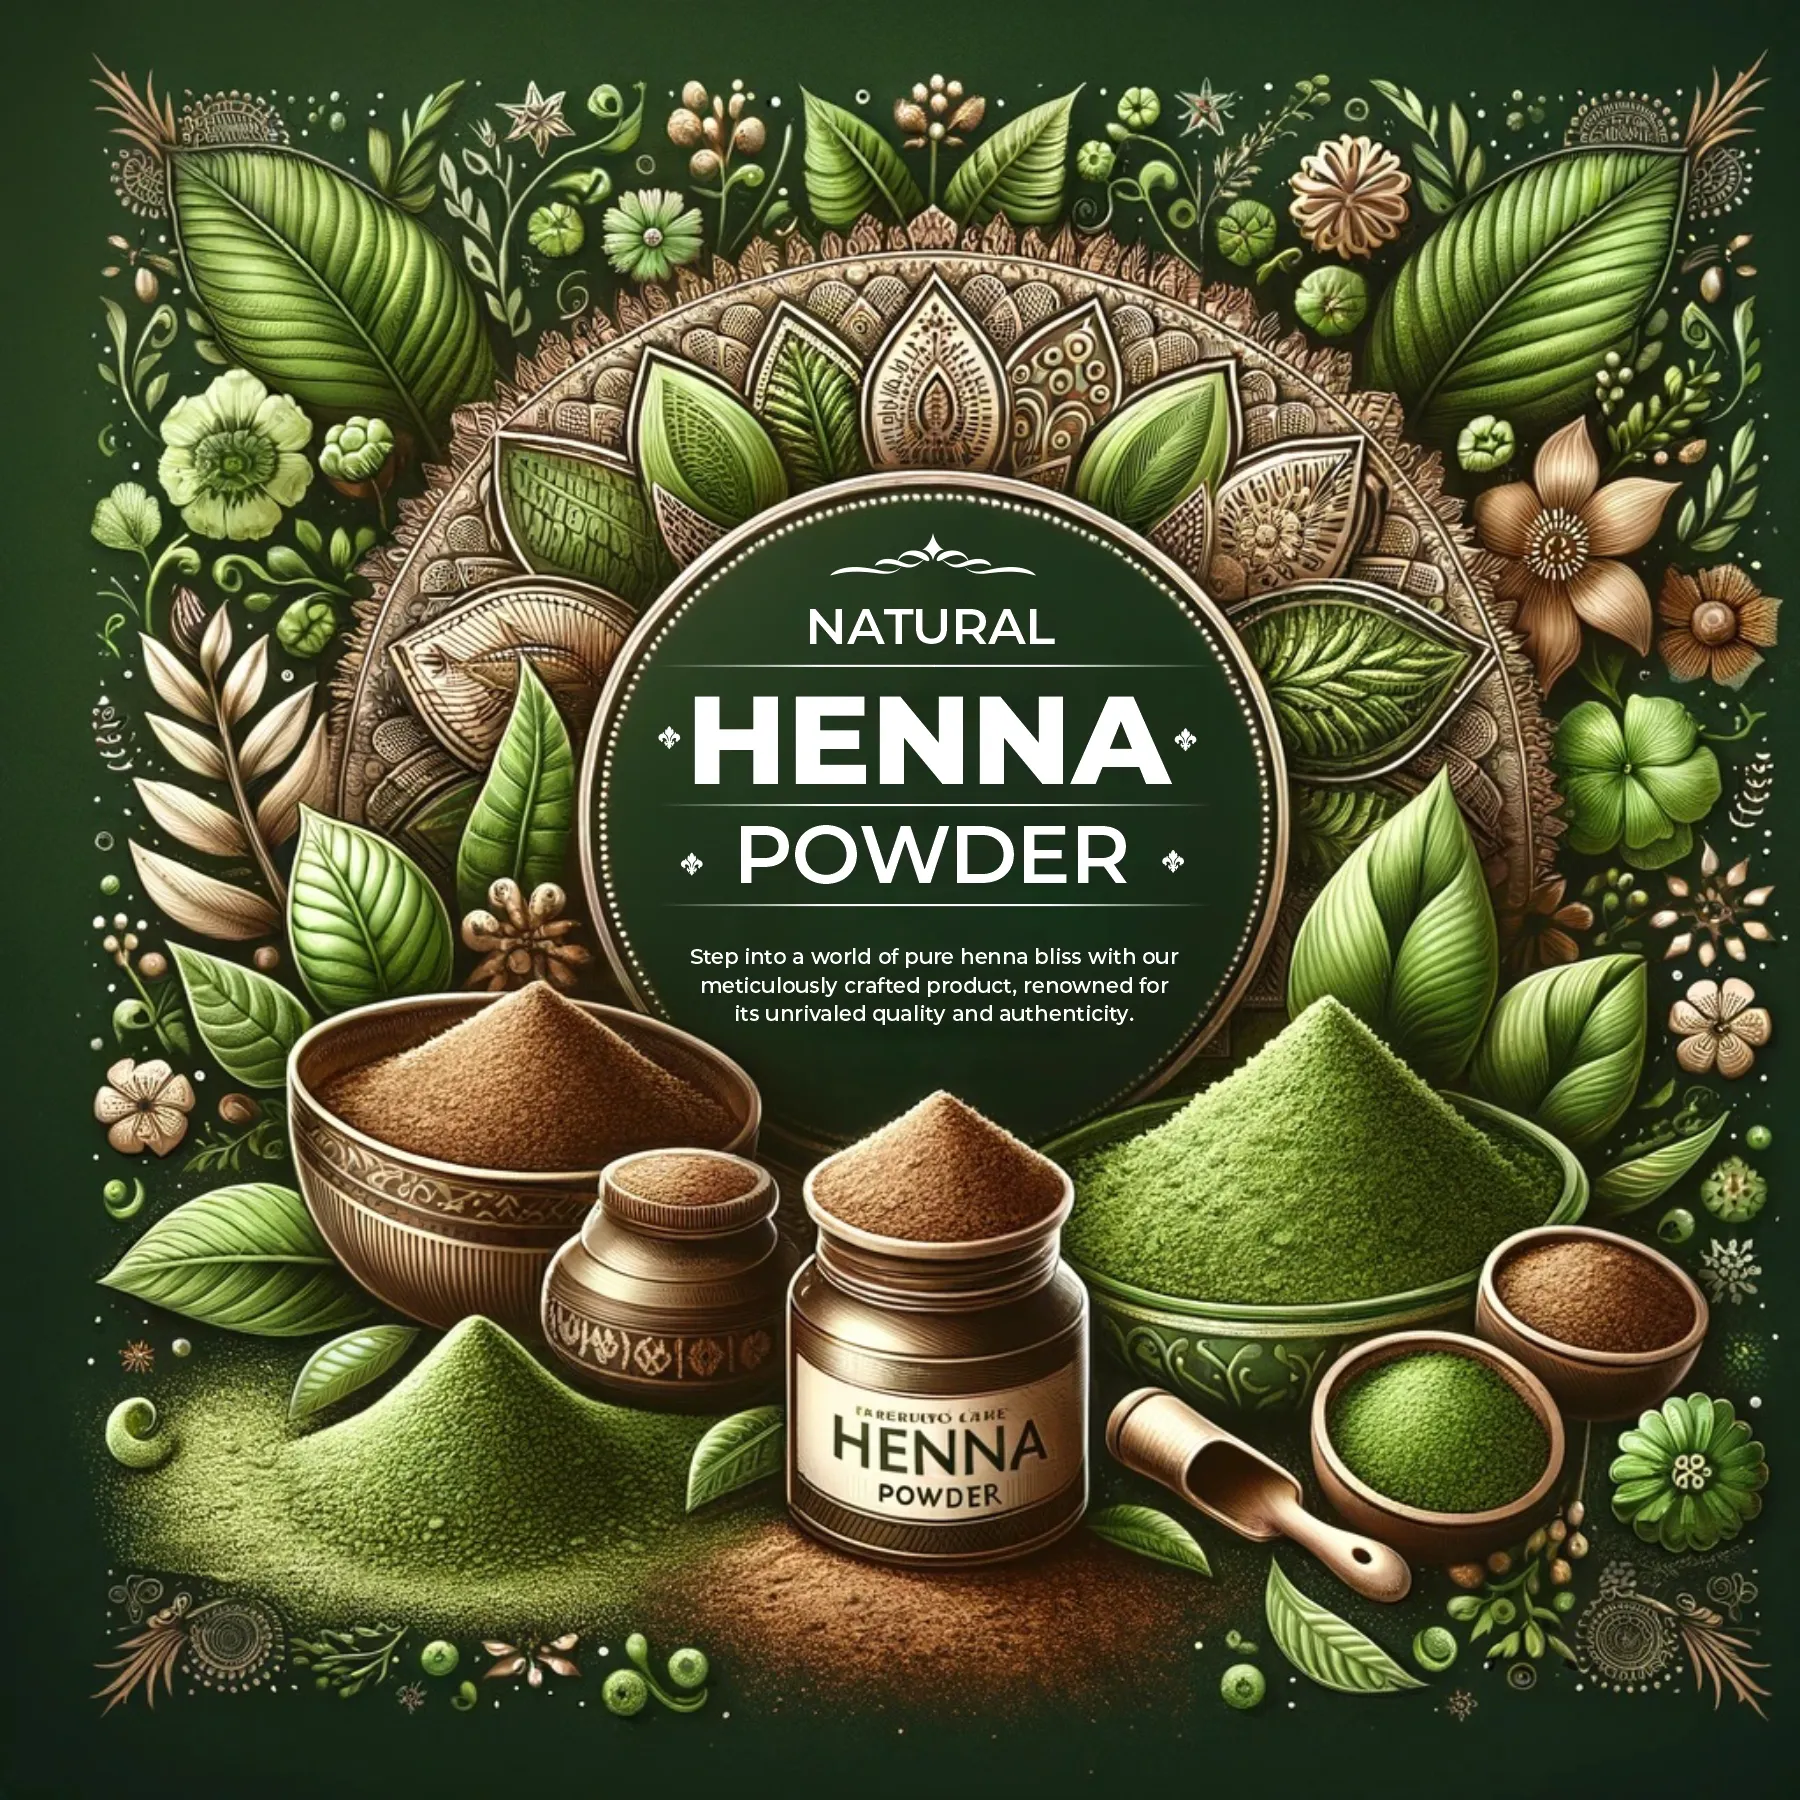 Natural henna powder mobile banner - www.dkihenna.com